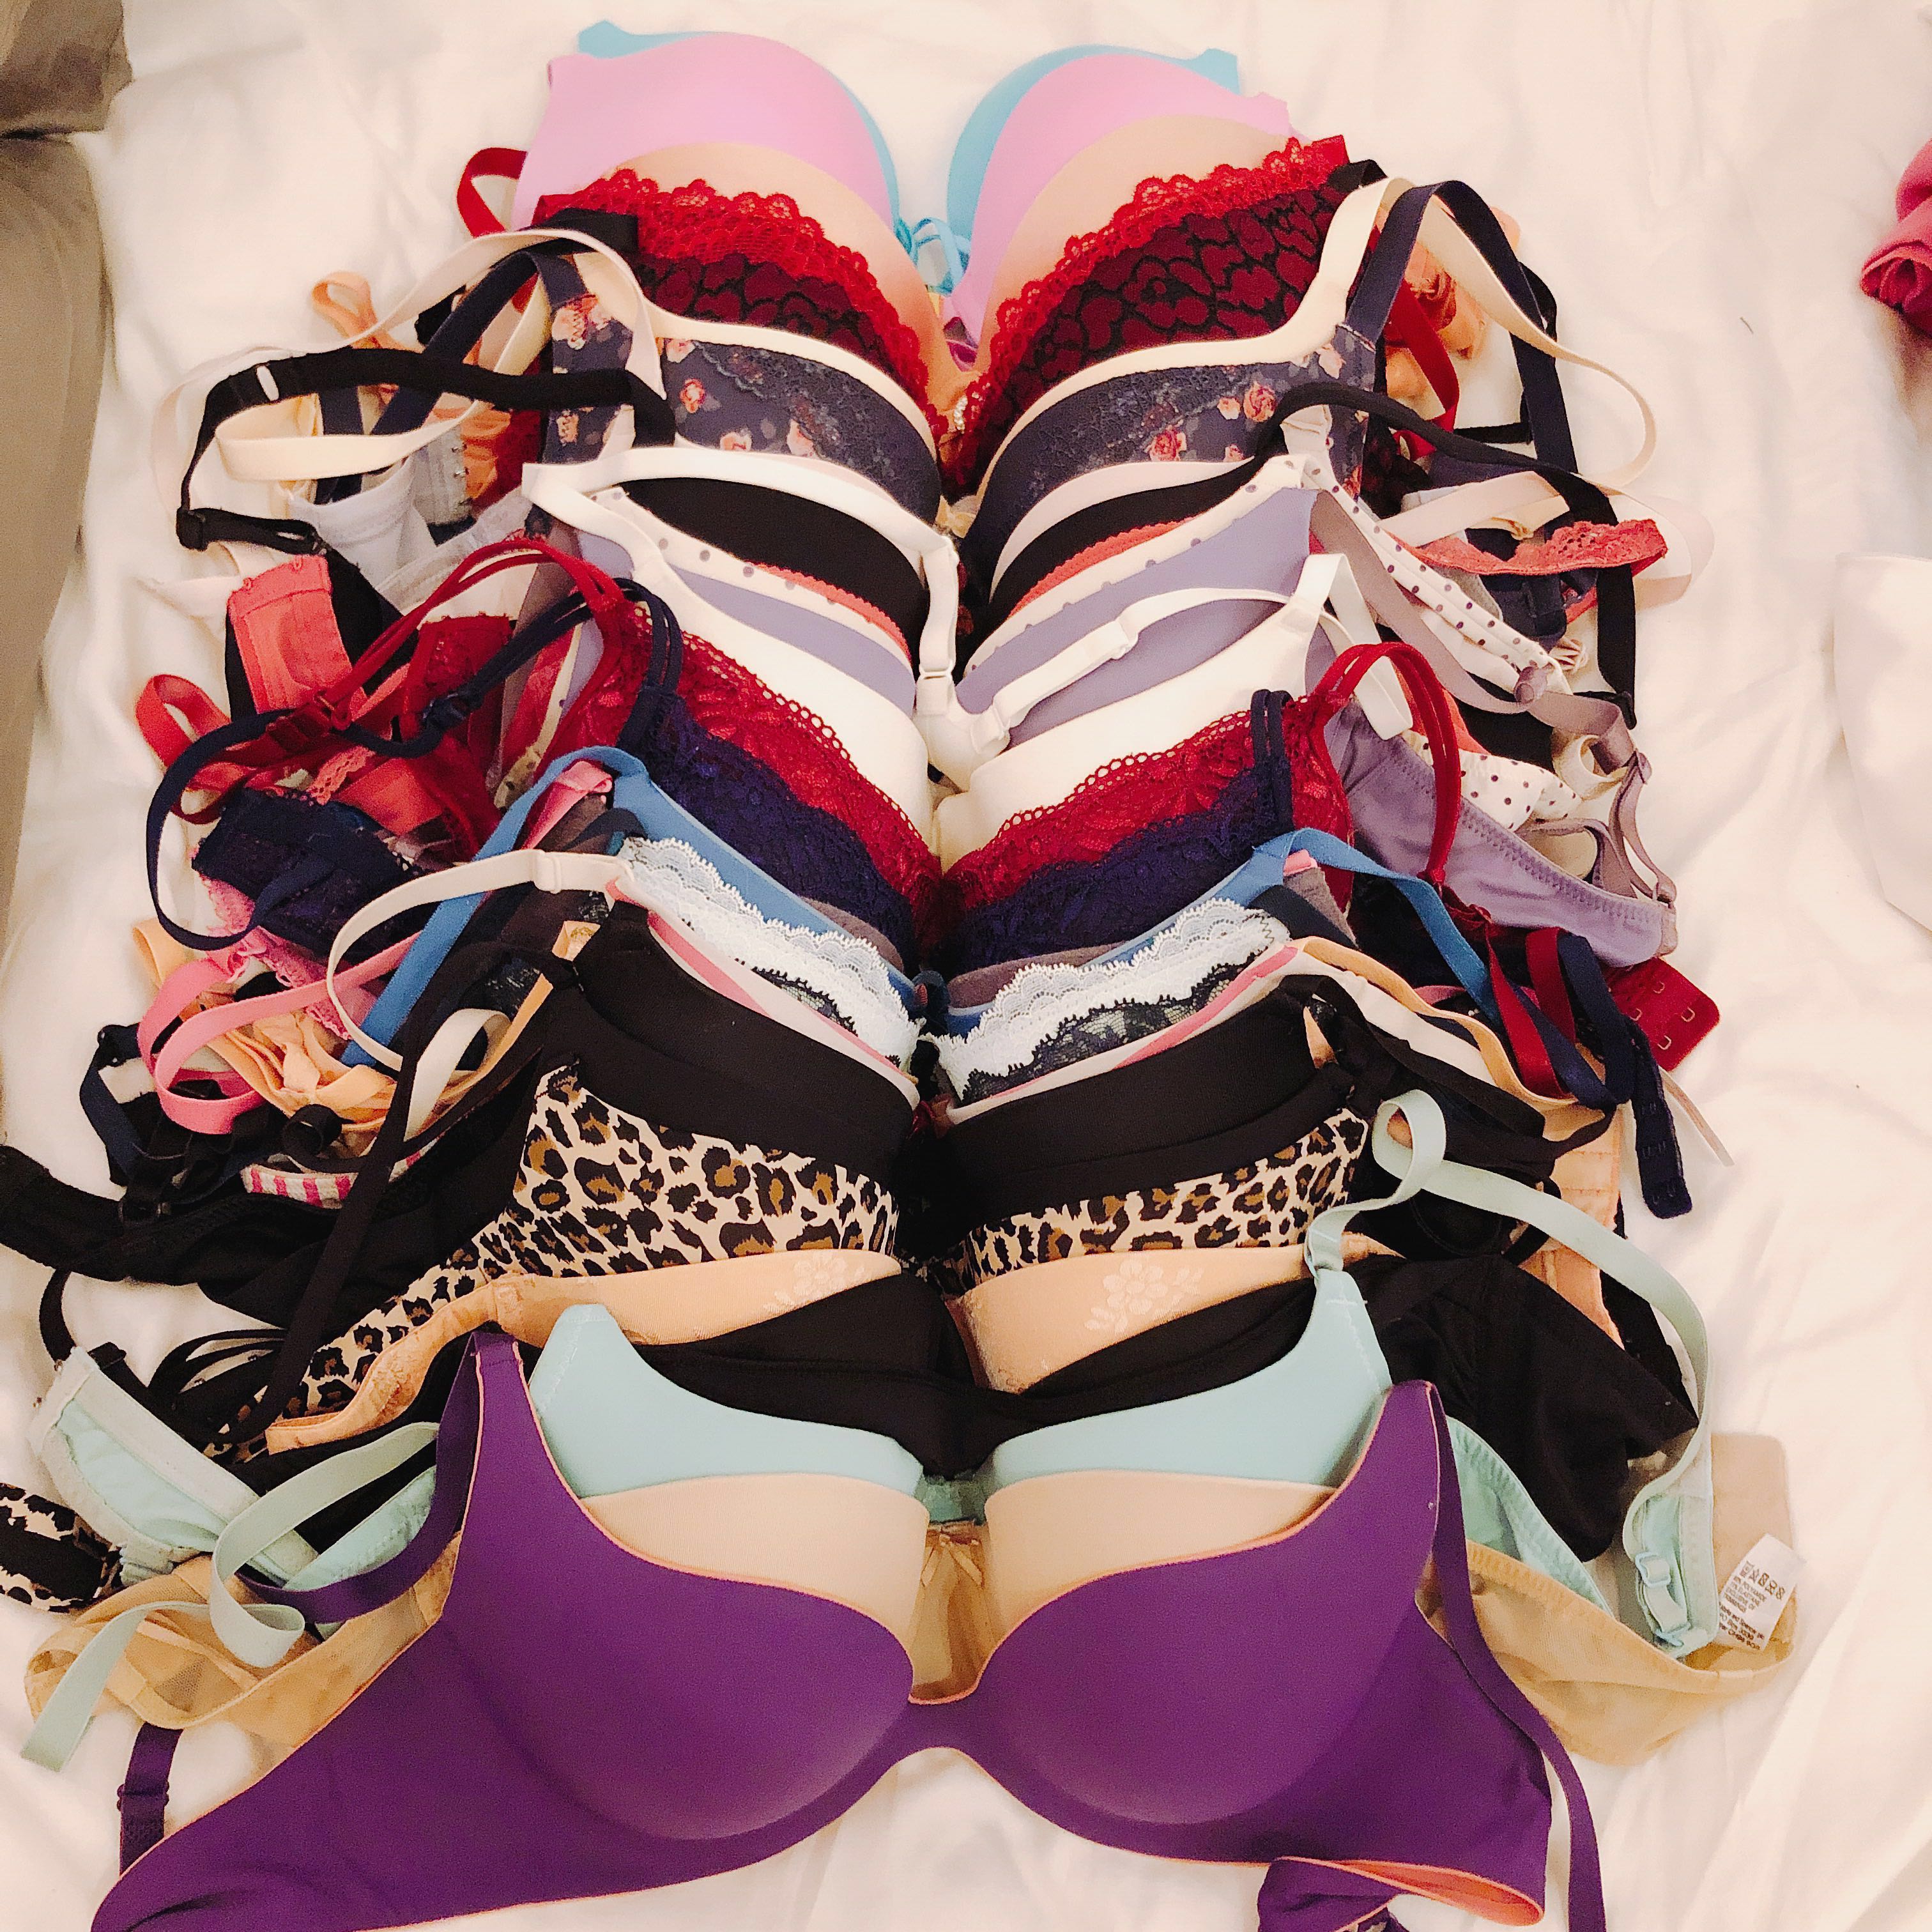 Victoria's Secret bra bundle 34B. 2 bras with - Depop